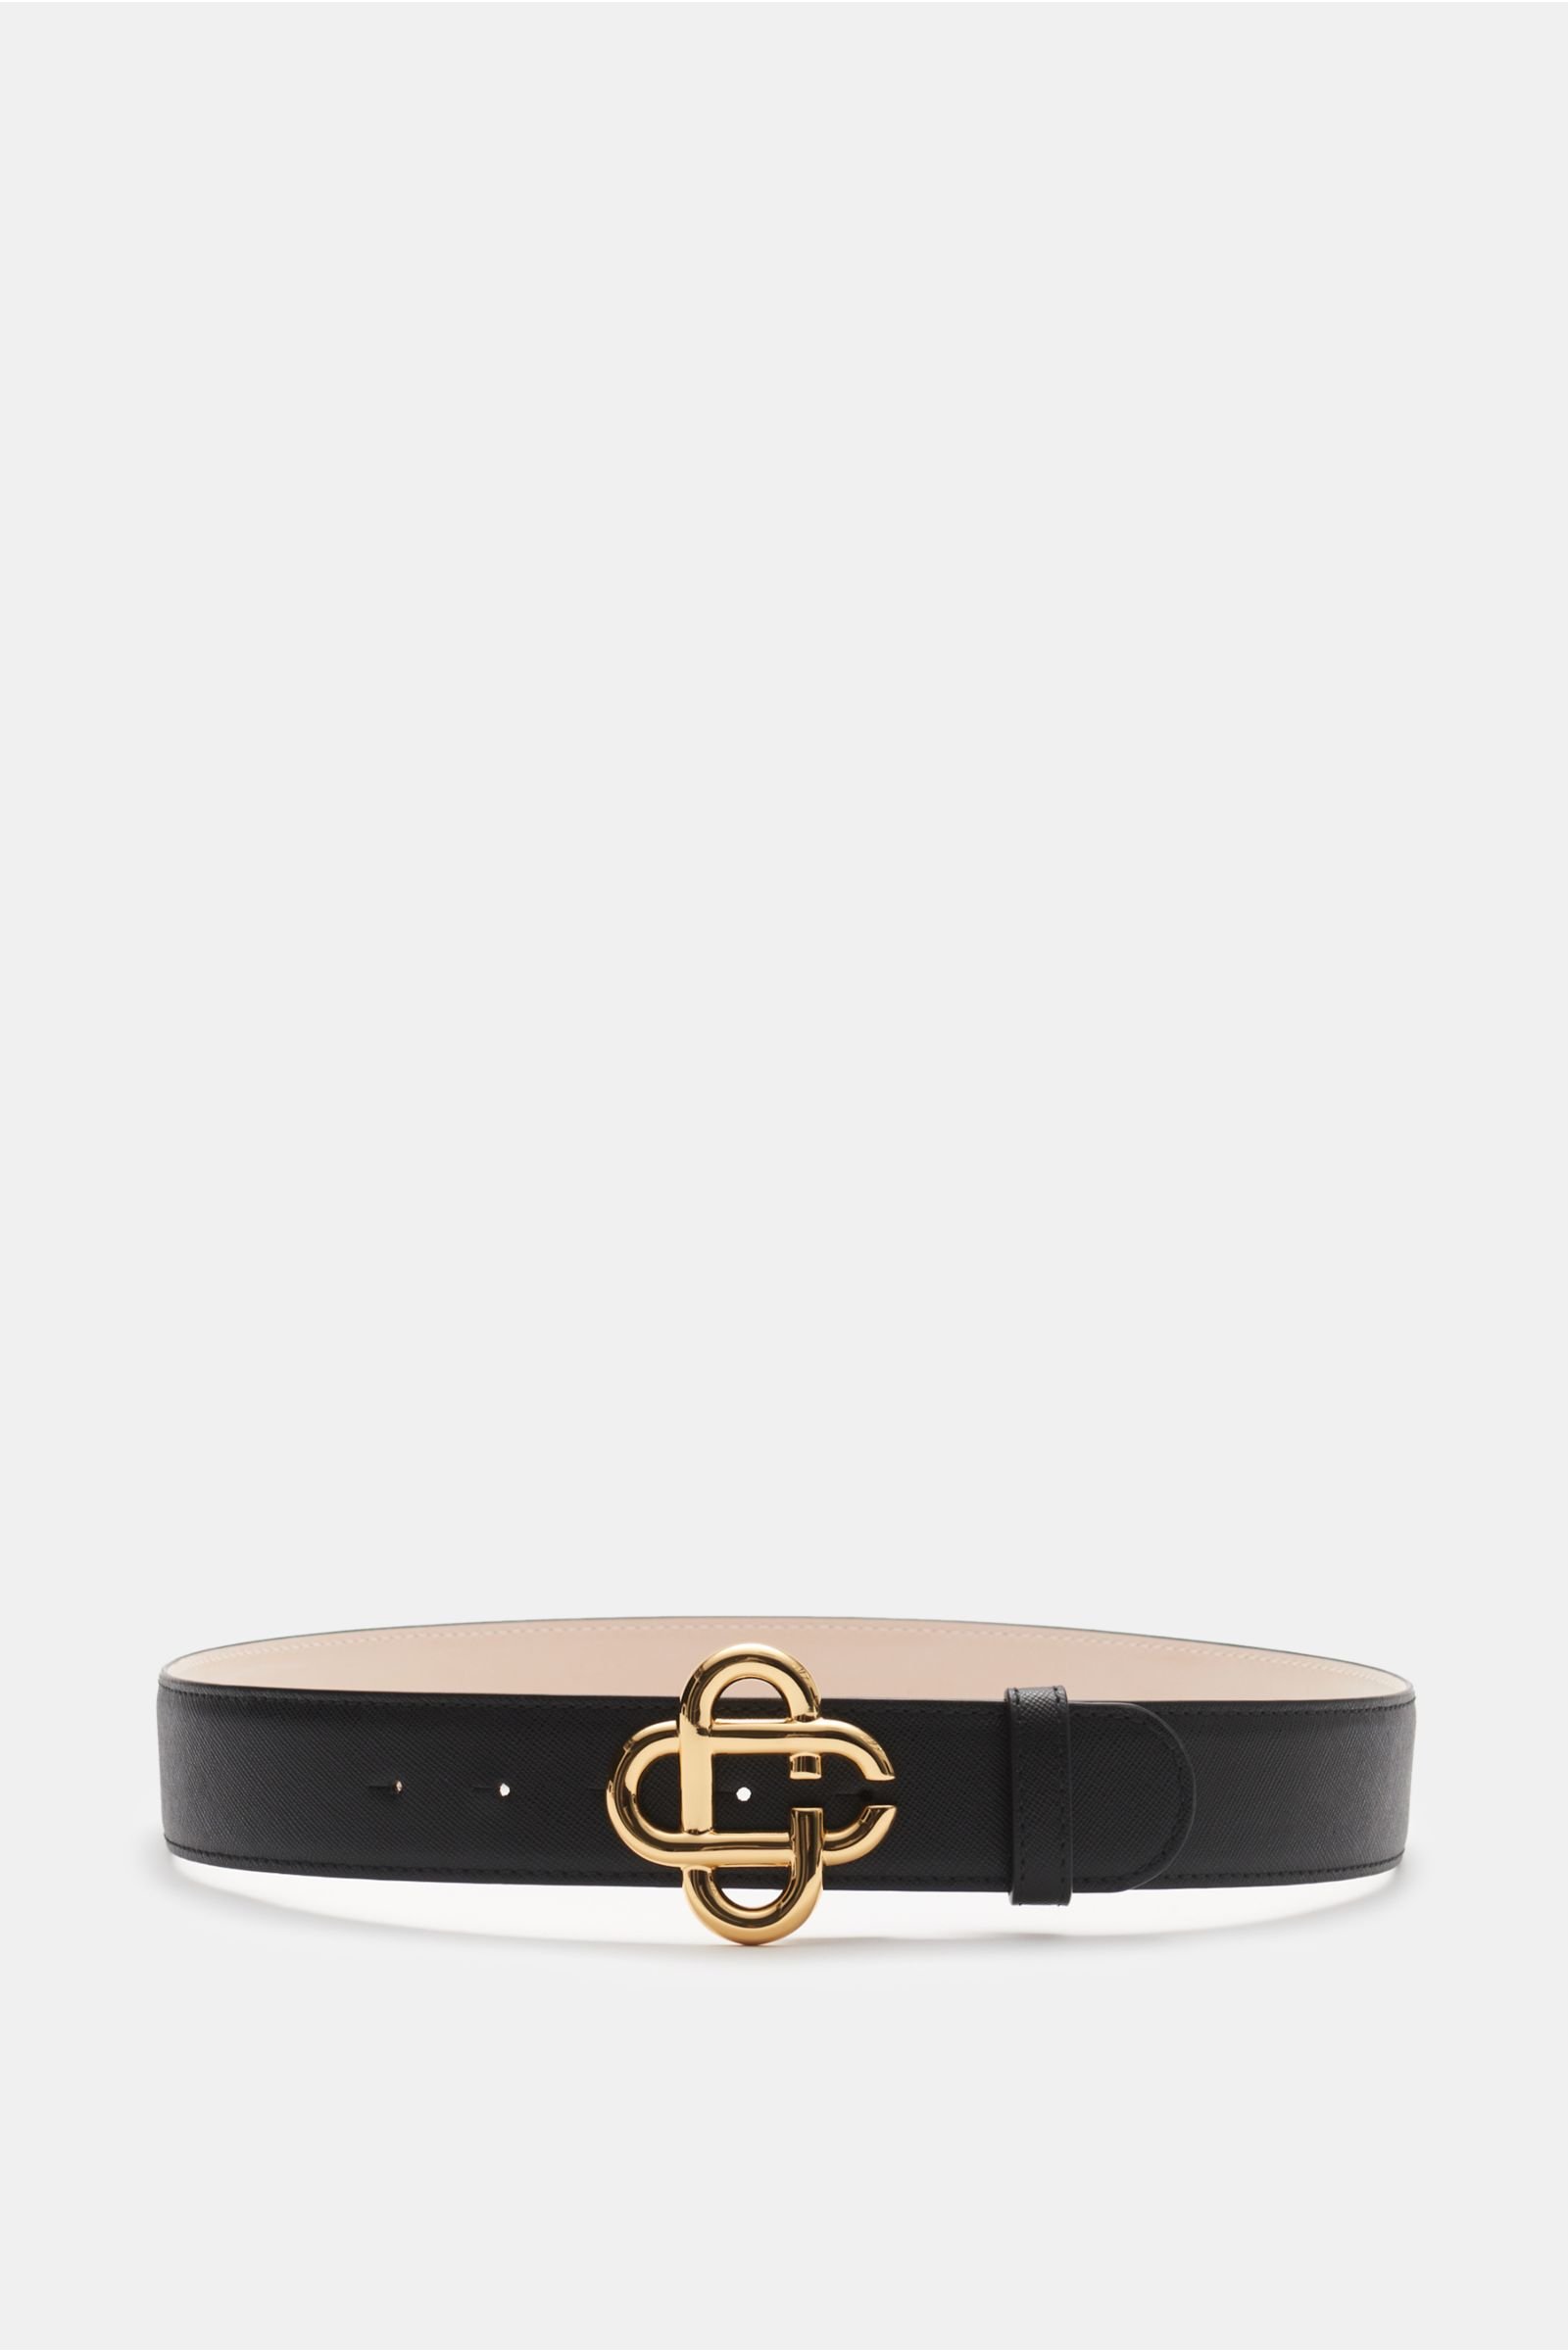 CASABLANCA belt black | BRAUN Hamburg